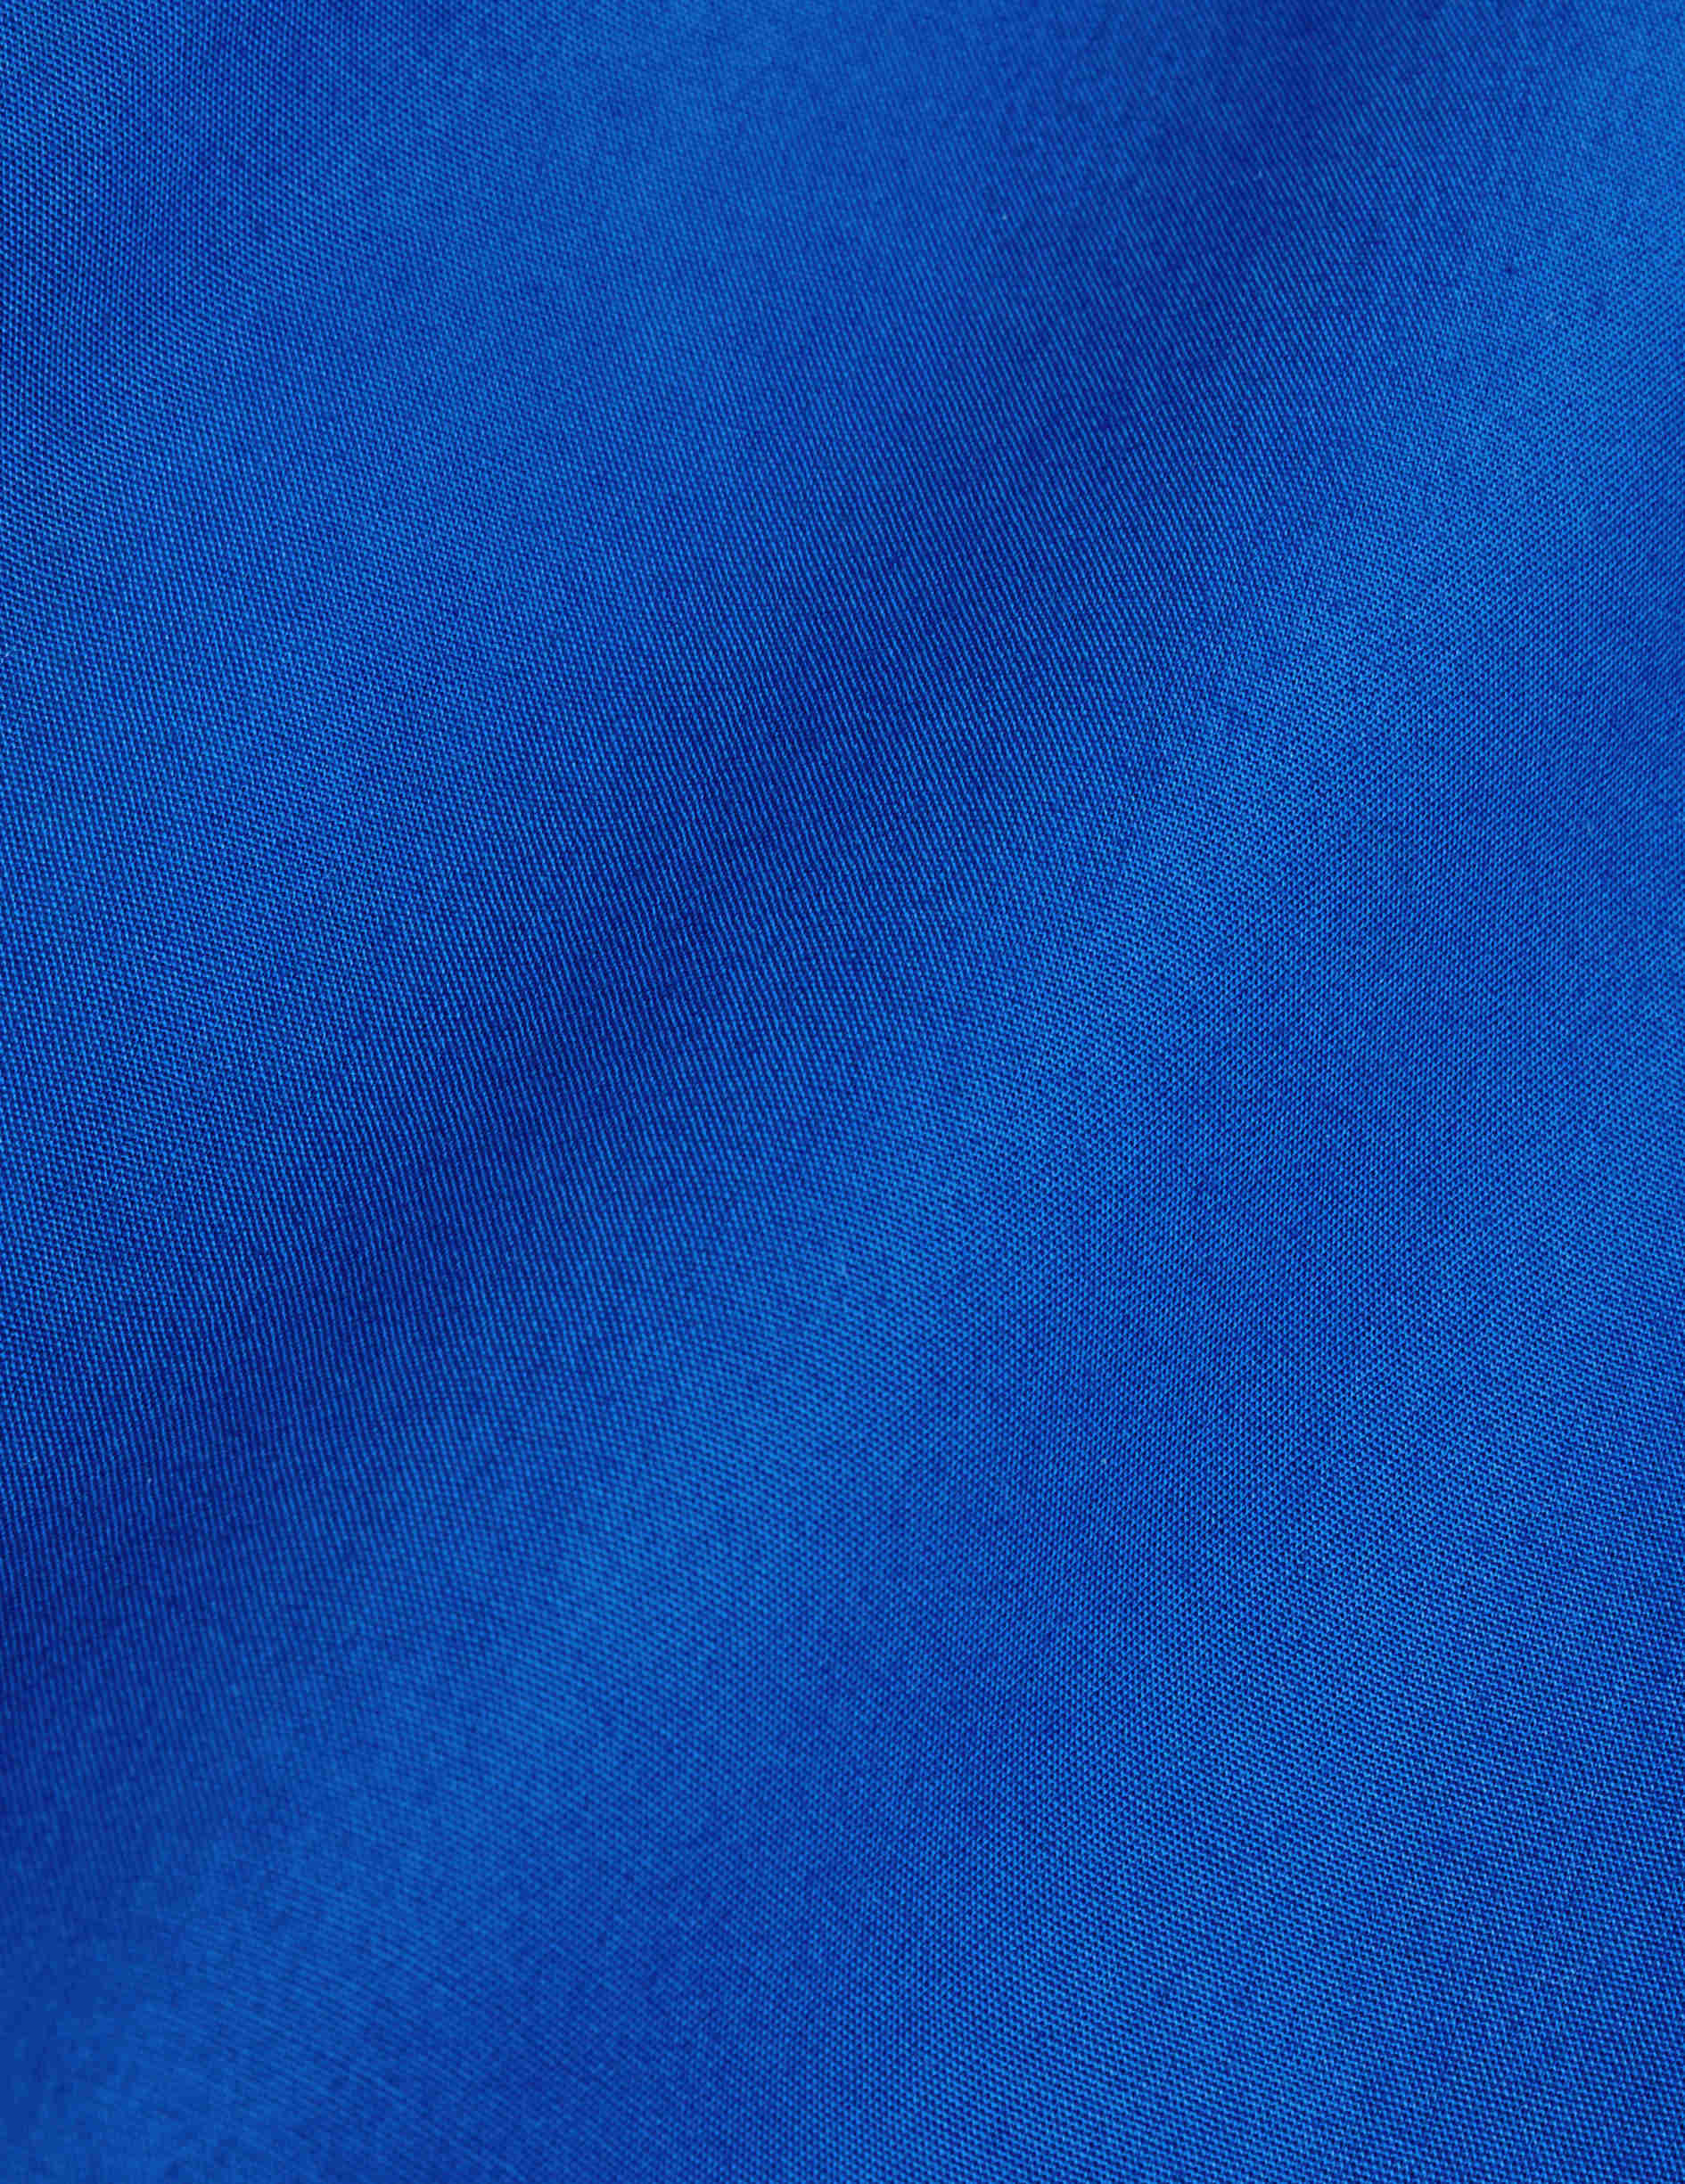 Chemise mixte "Je t'aime" bleue brodée blanc - Popeline - Col Figaret